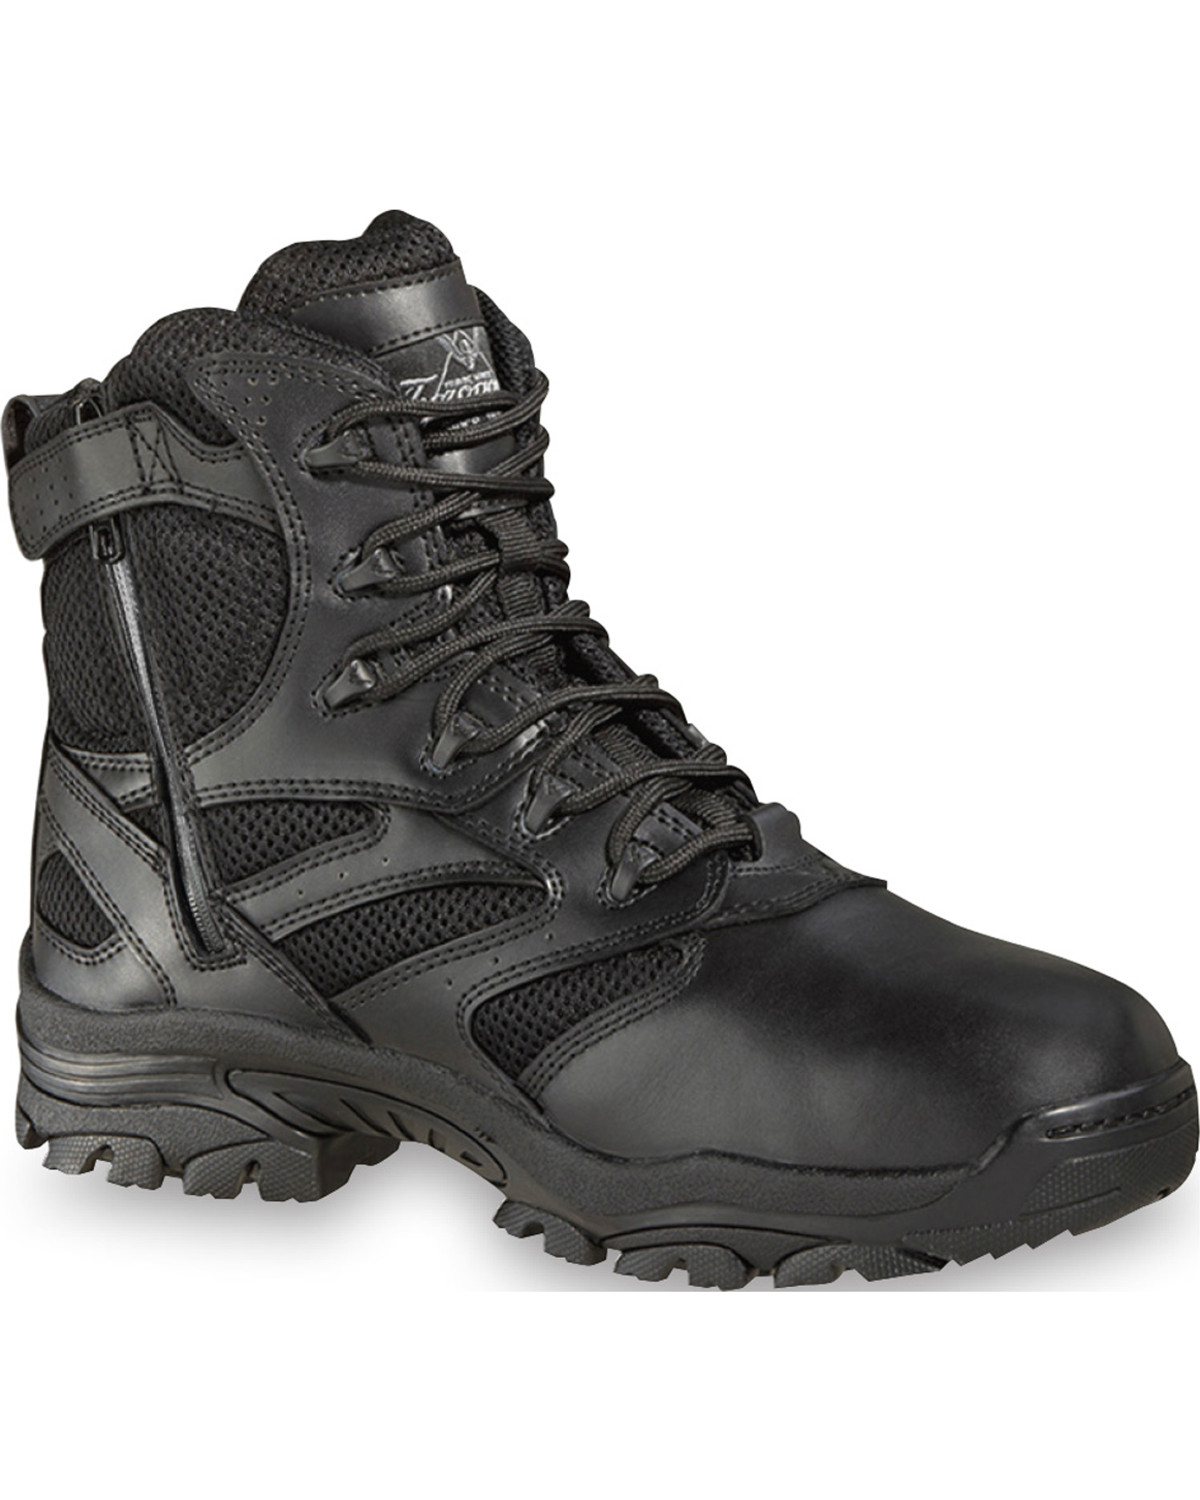 Thorogood Men's Deuce 6" Waterproof Side Zip Work Boots - Soft Toe